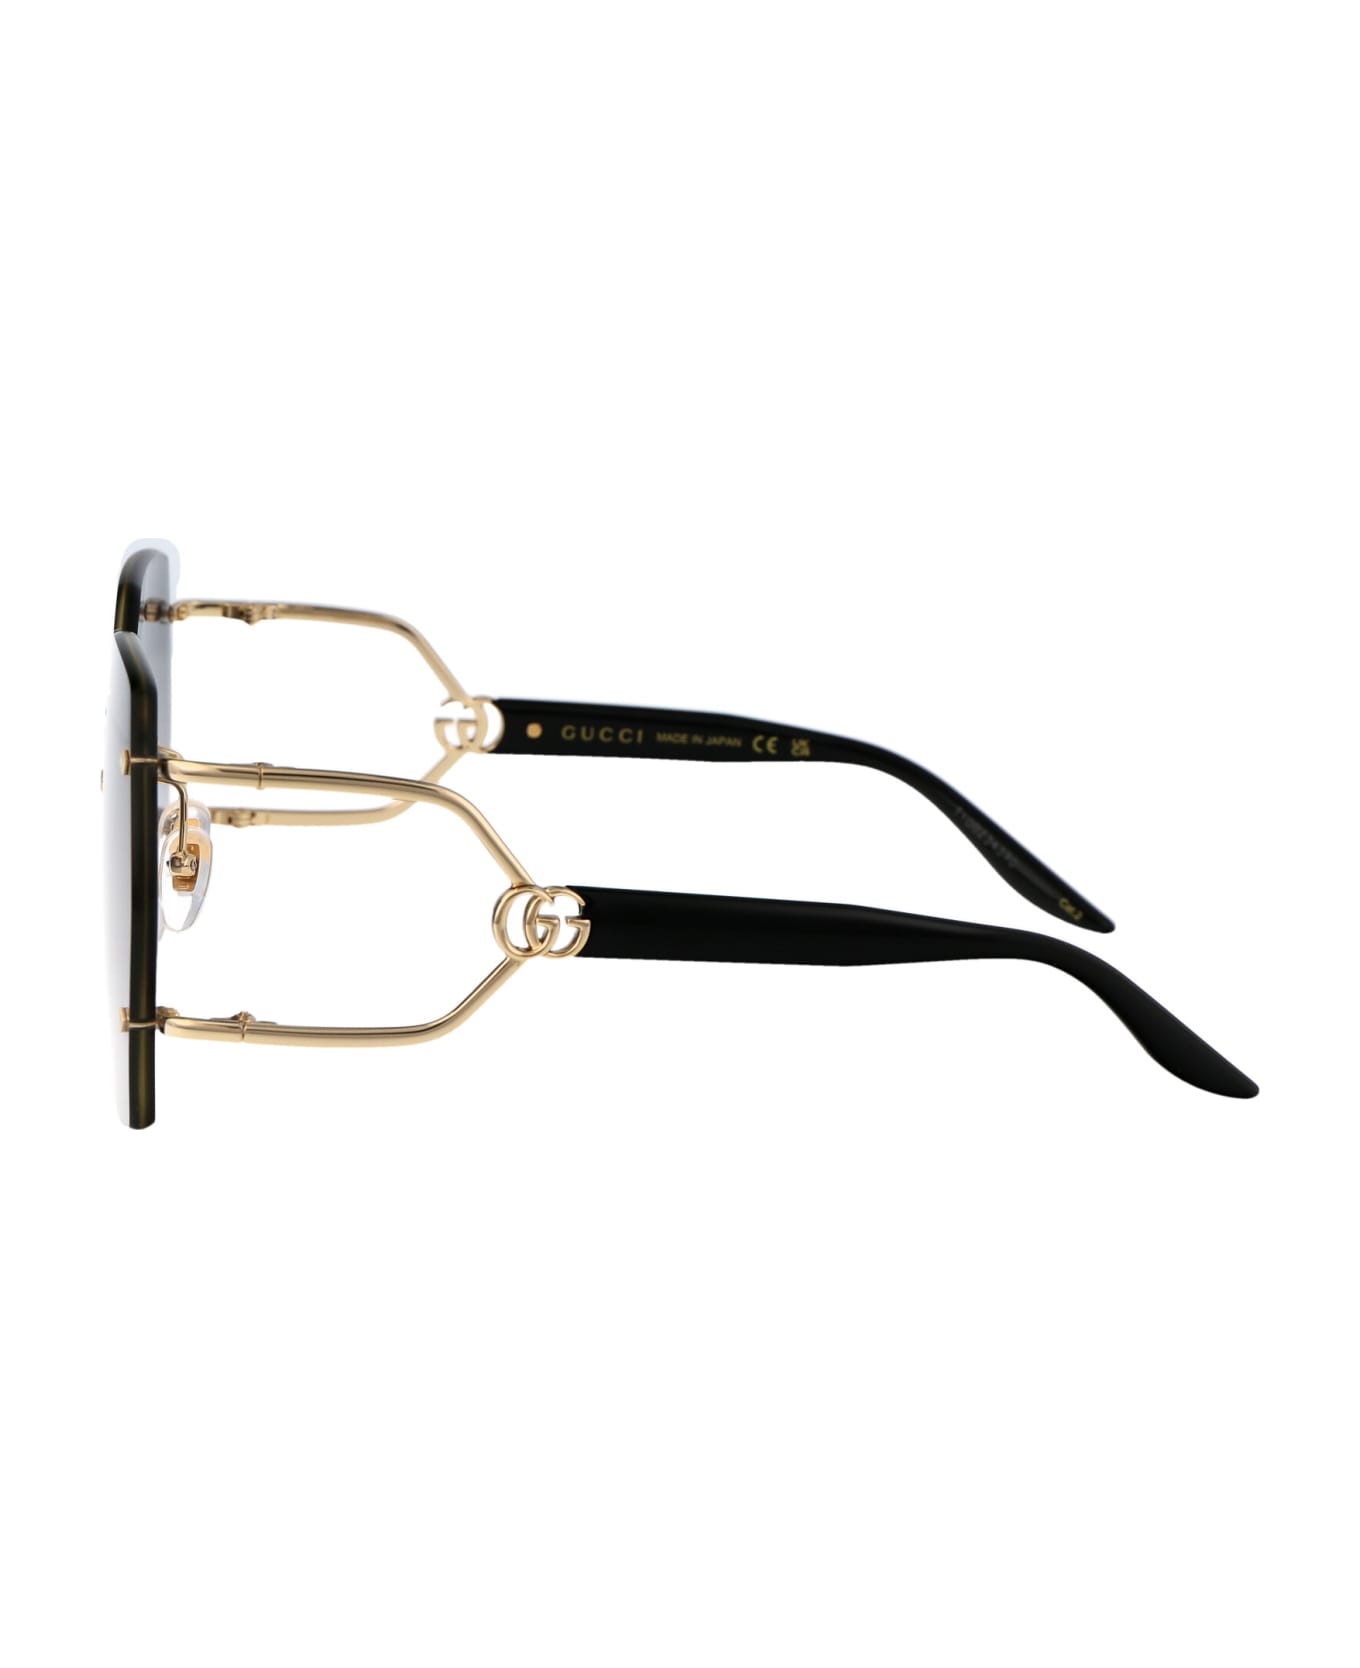 Gucci Eyewear Gg1562s Sunglasses - 001 GOLD BLACK GREY